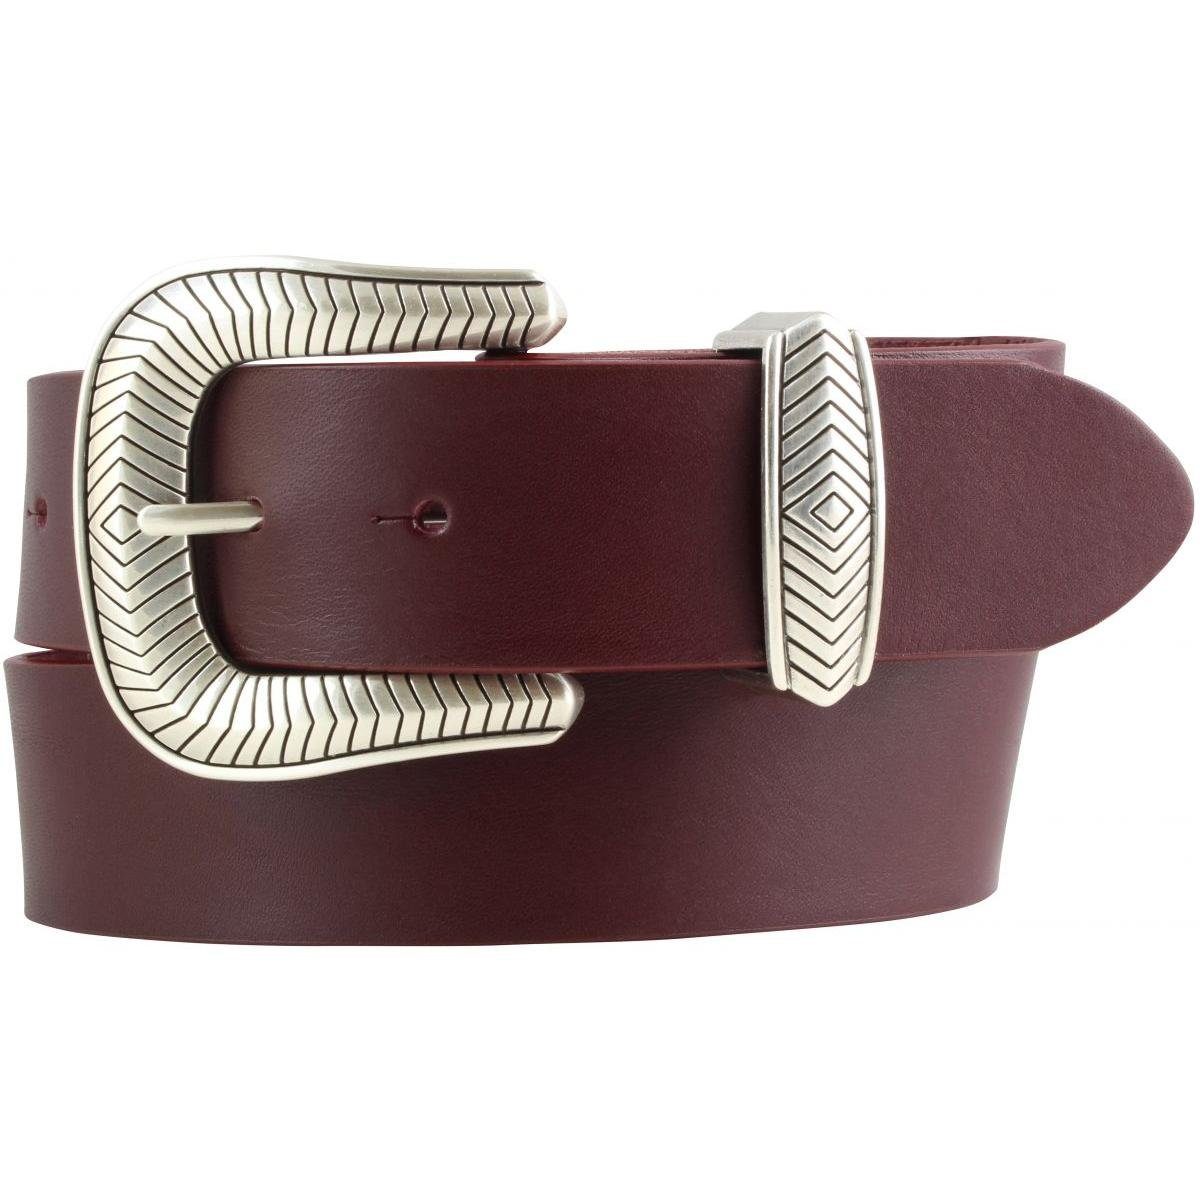 Designer-Gürtel Metall-Schlaufe aus mit Jeans-Gür cm BELTINGER Bordeaux, - Ledergürtel Vollrindleder 4 Silber